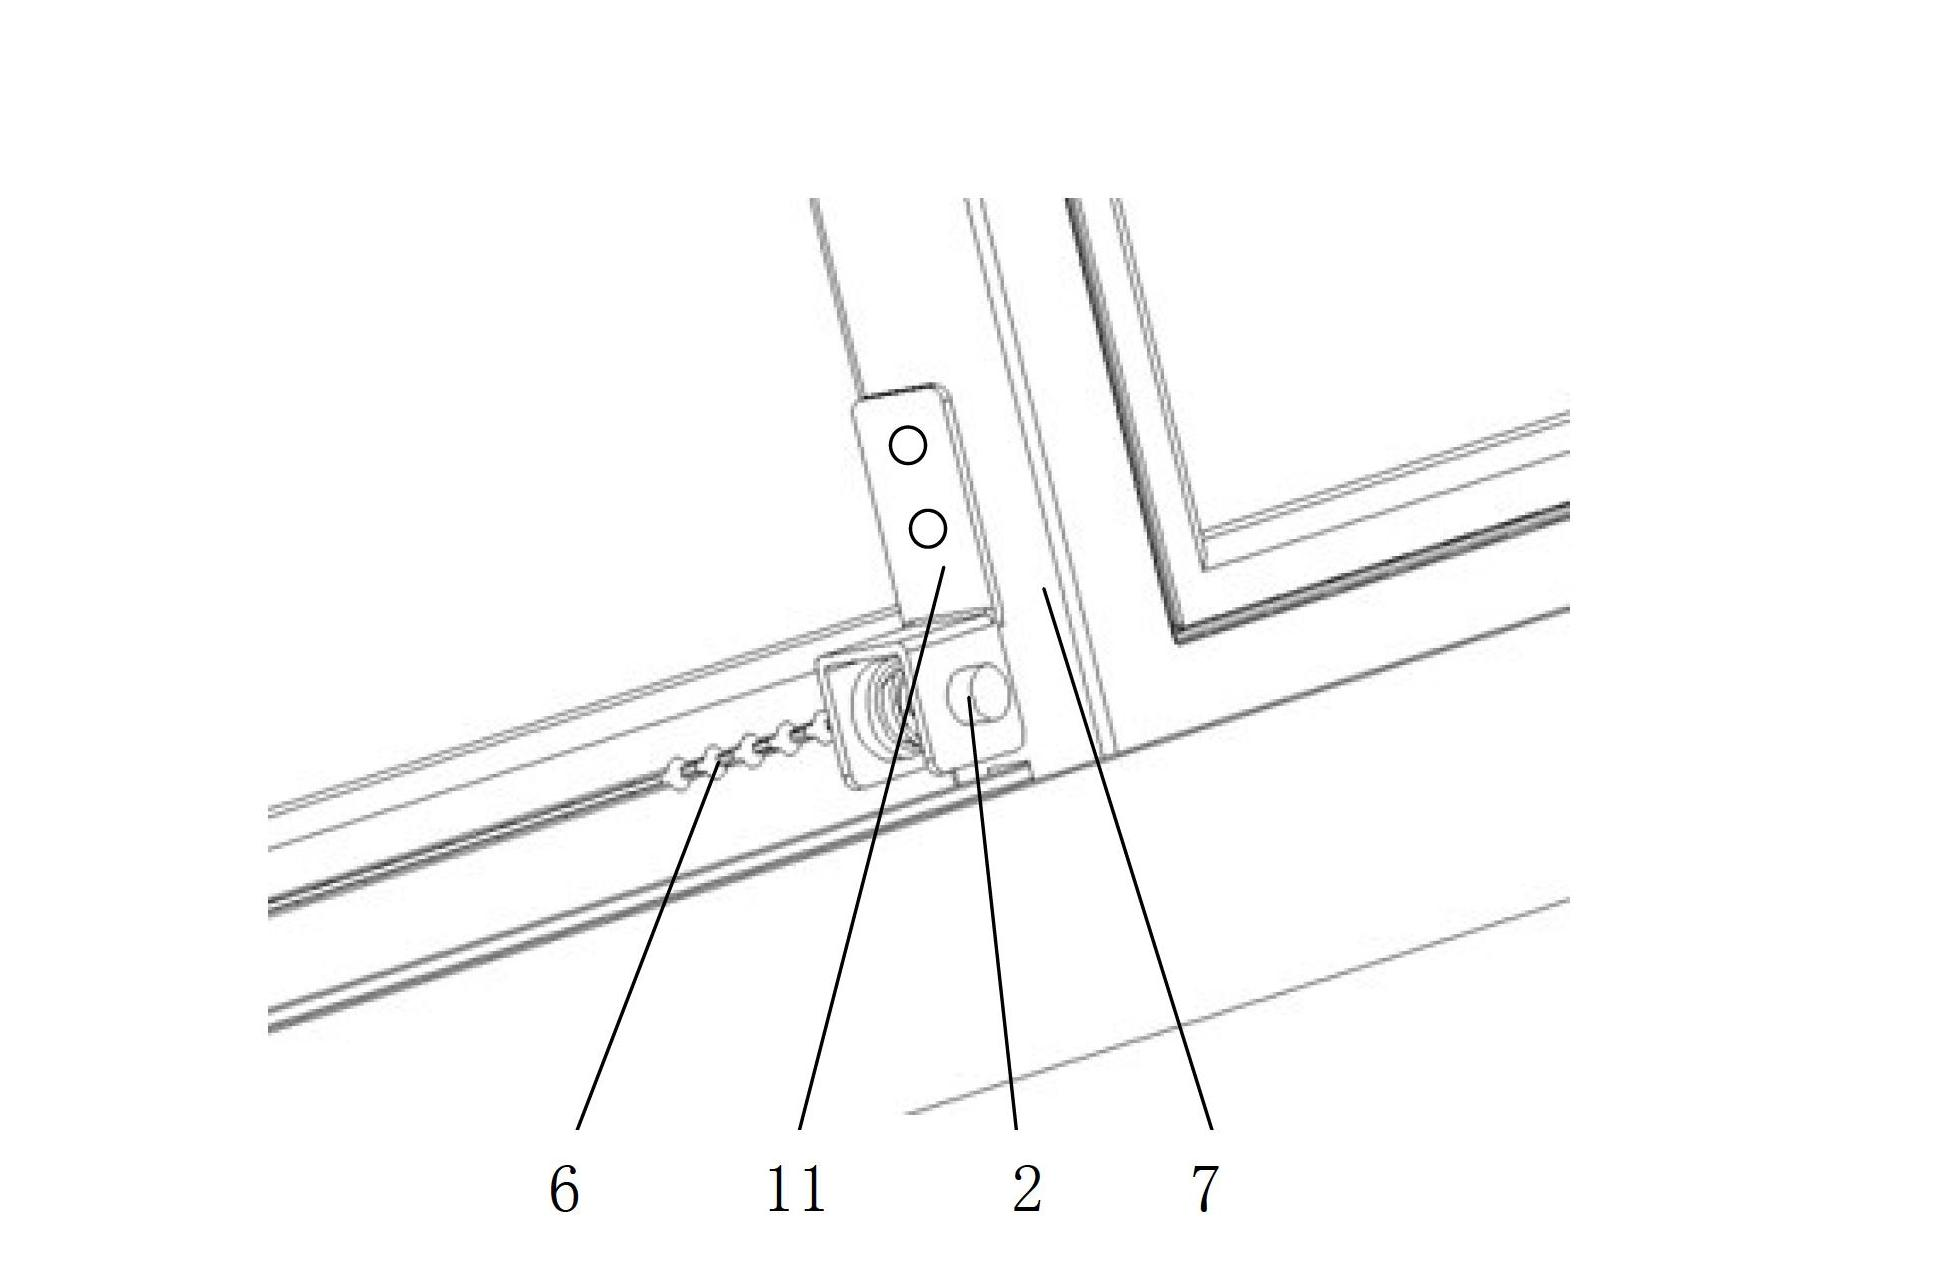 Inserted-pin split type safety locking fastener for sliding doors/windows